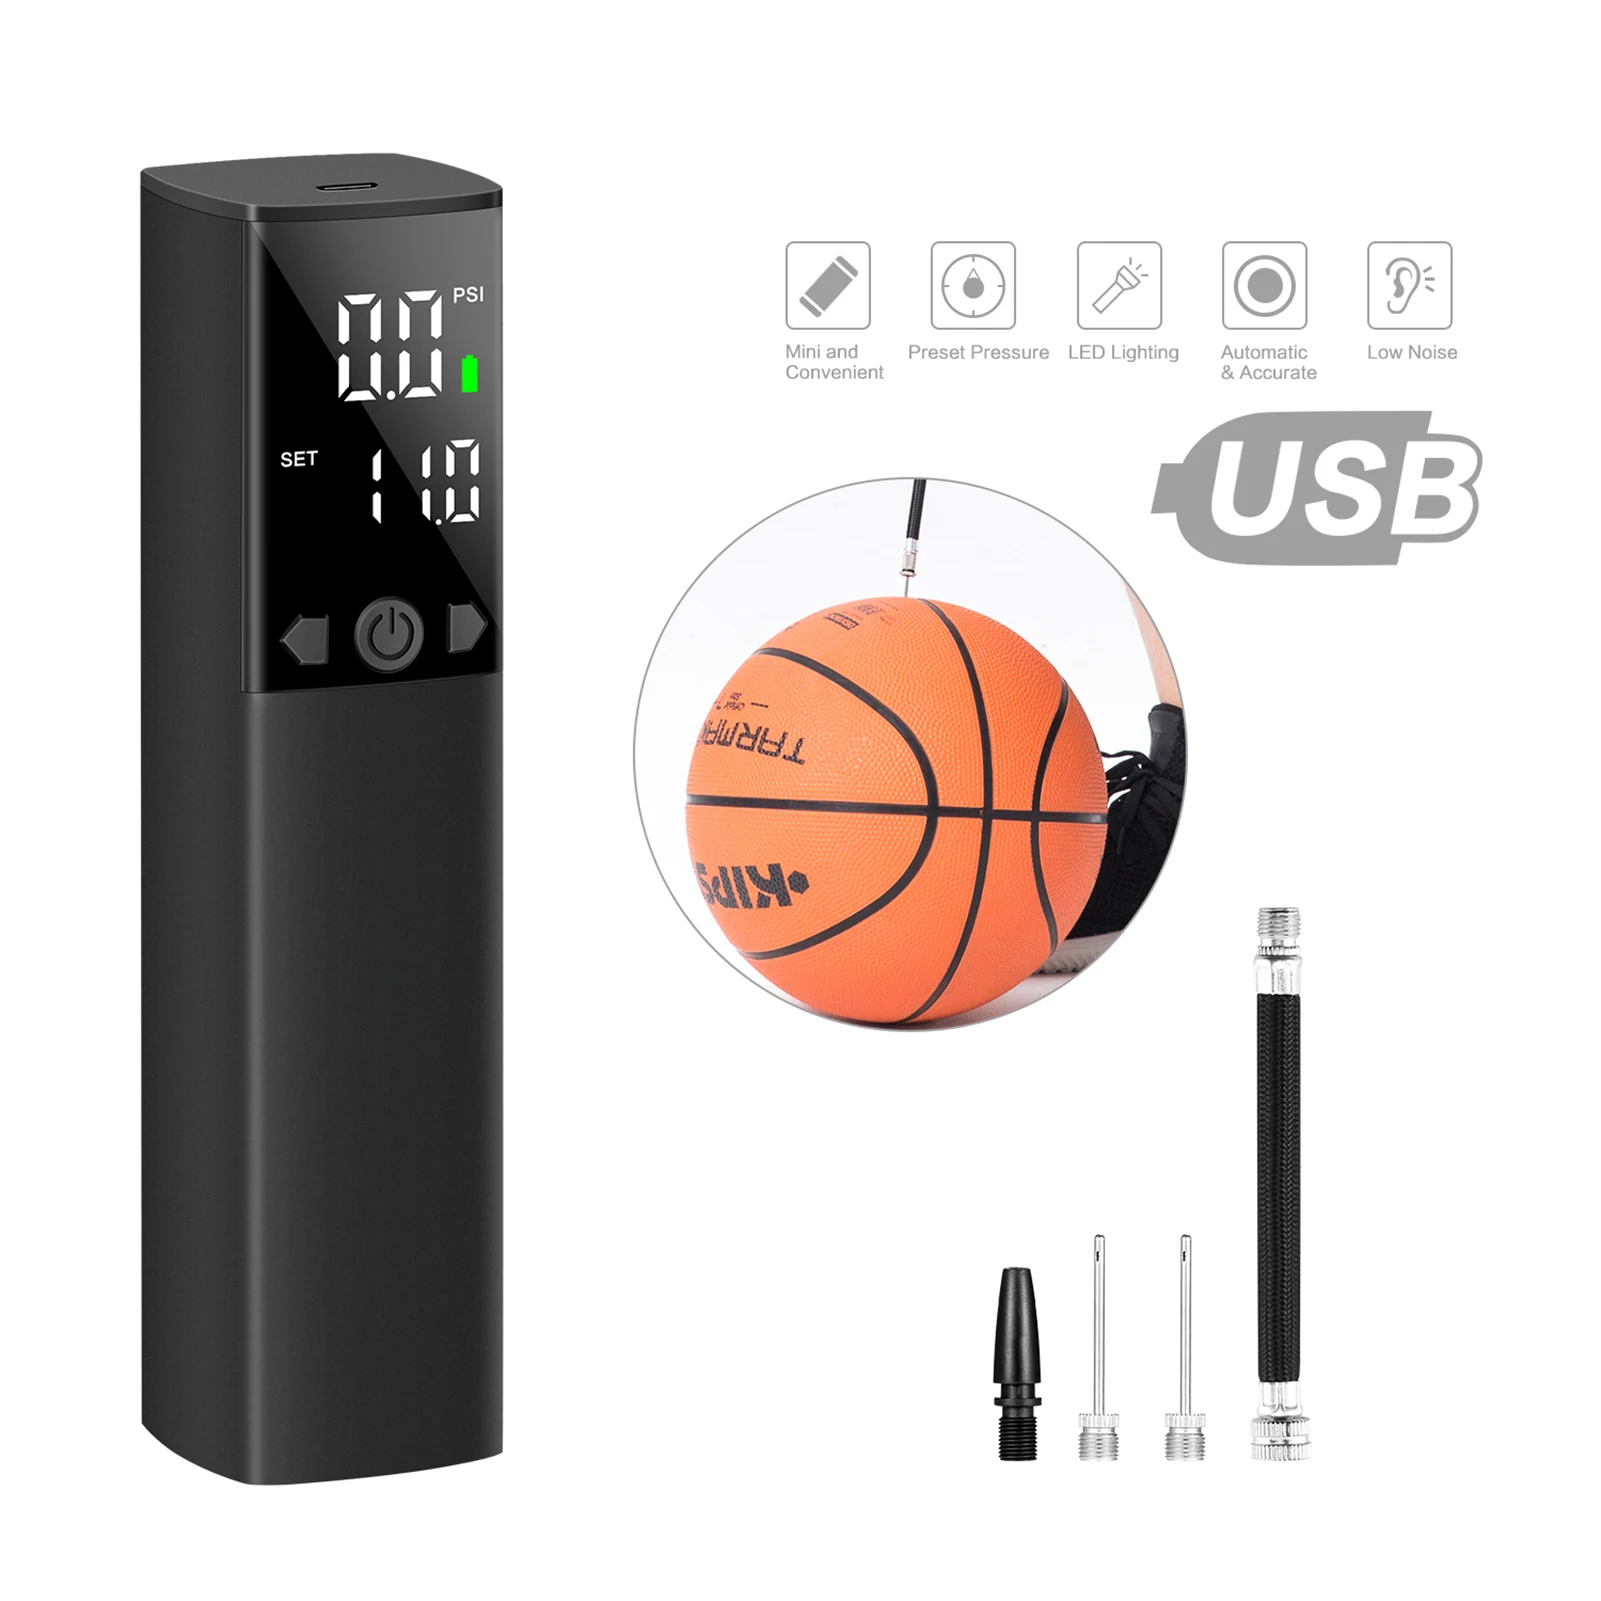 https://ae01.alicdn.com/kf/Hc01a898146d14c5193410111f46a2708I/12PSI-Wiederaufladbare-Tragbare-Intelligente-Elektrische-Ball-Pumpe-f-r-Fu-ball-Basketball-Luftpumpe-Cordless-Kompressor-Digital.jpg